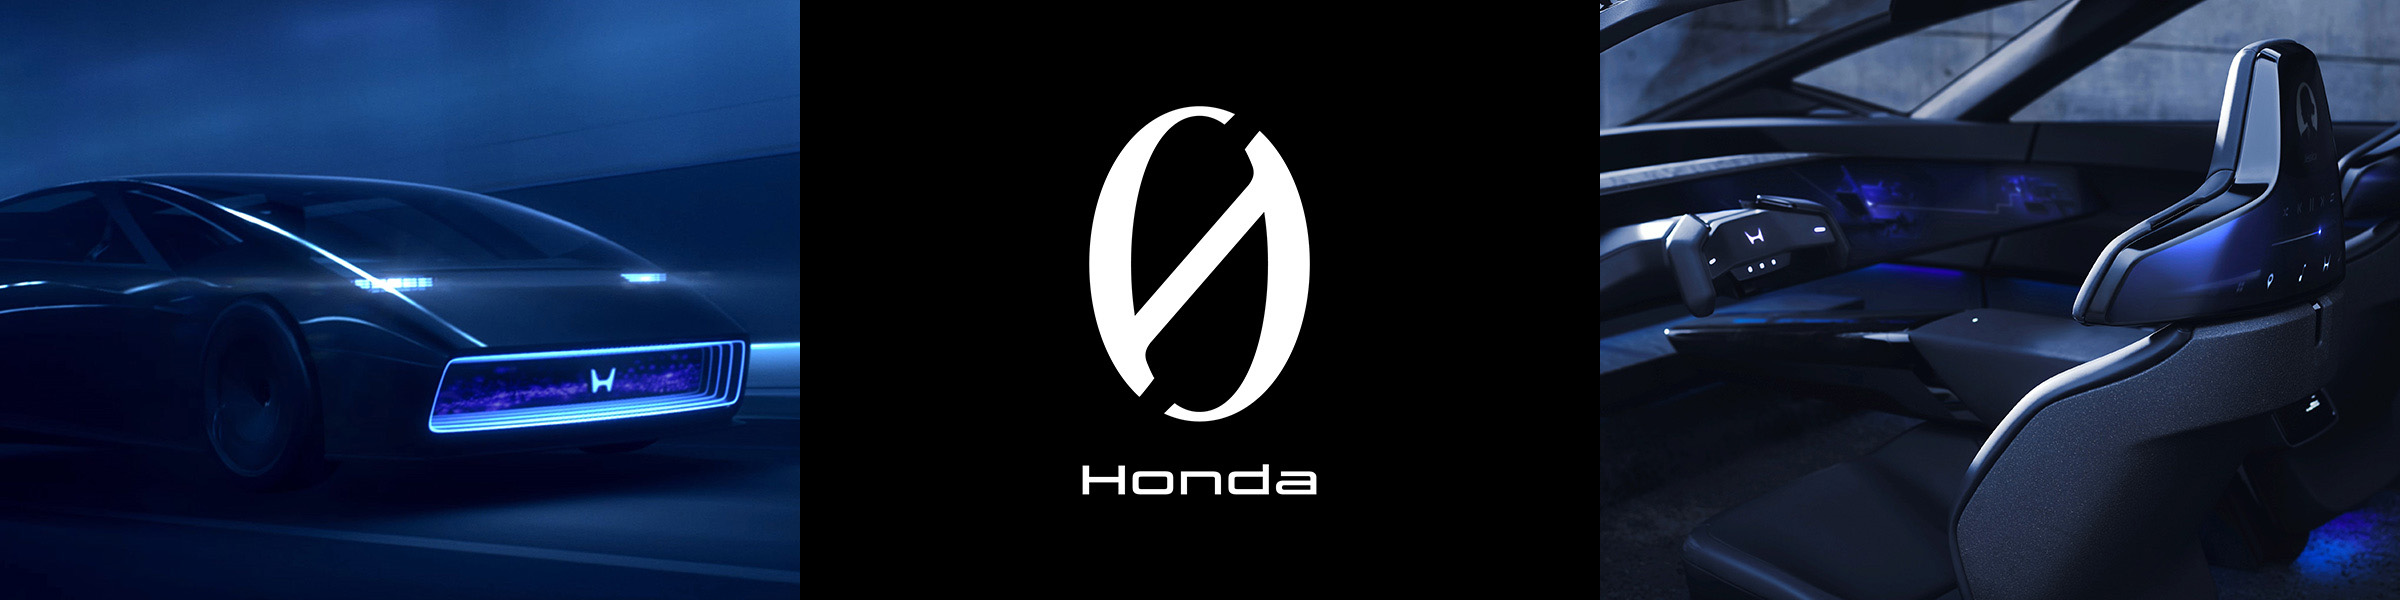 New Honda EV 0 series